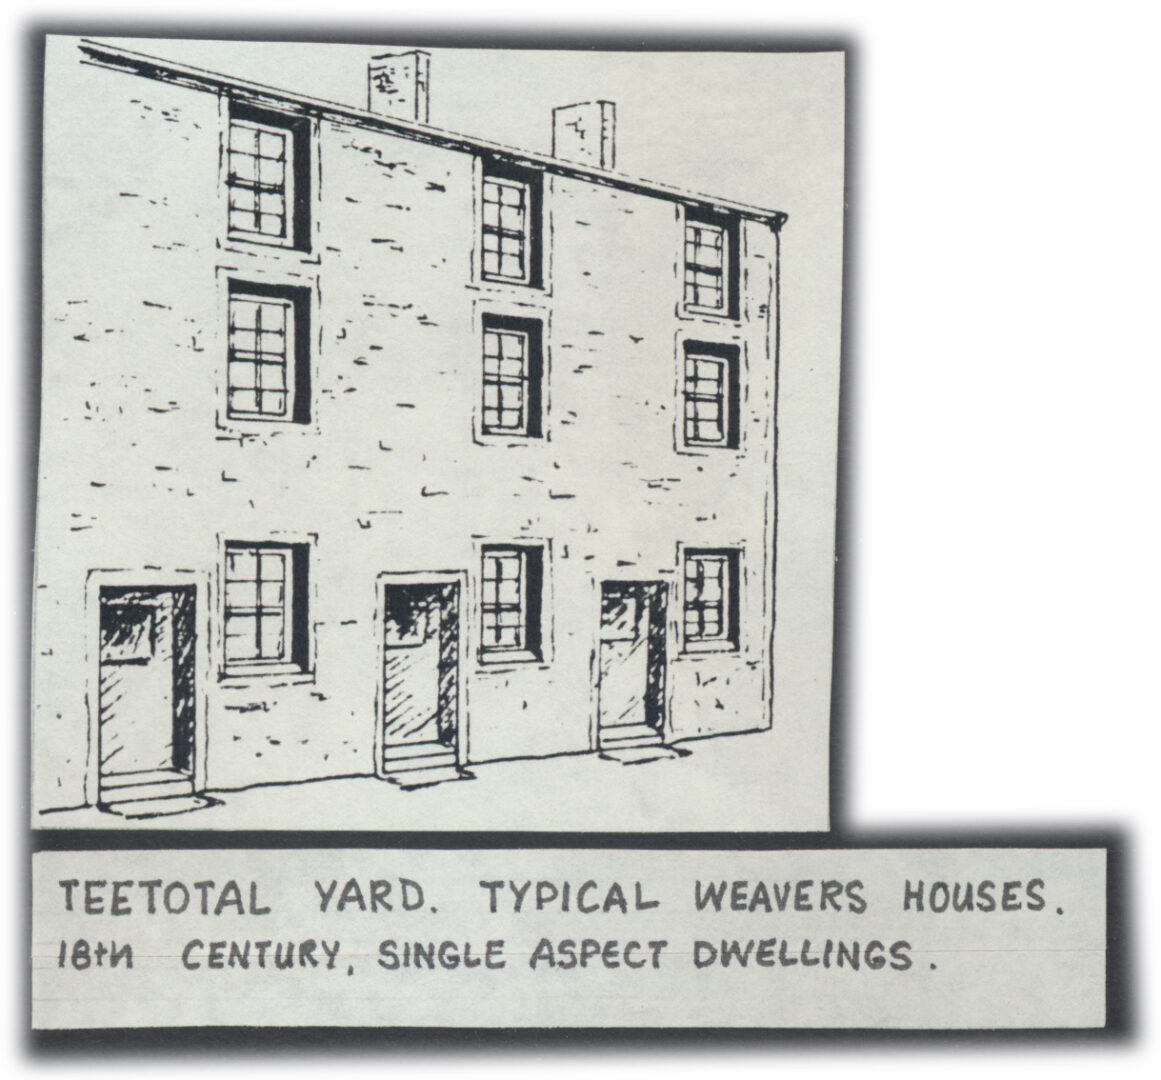 Teetotal Yard typical weavers houses 18C single aspect dwellings 1989 drawing